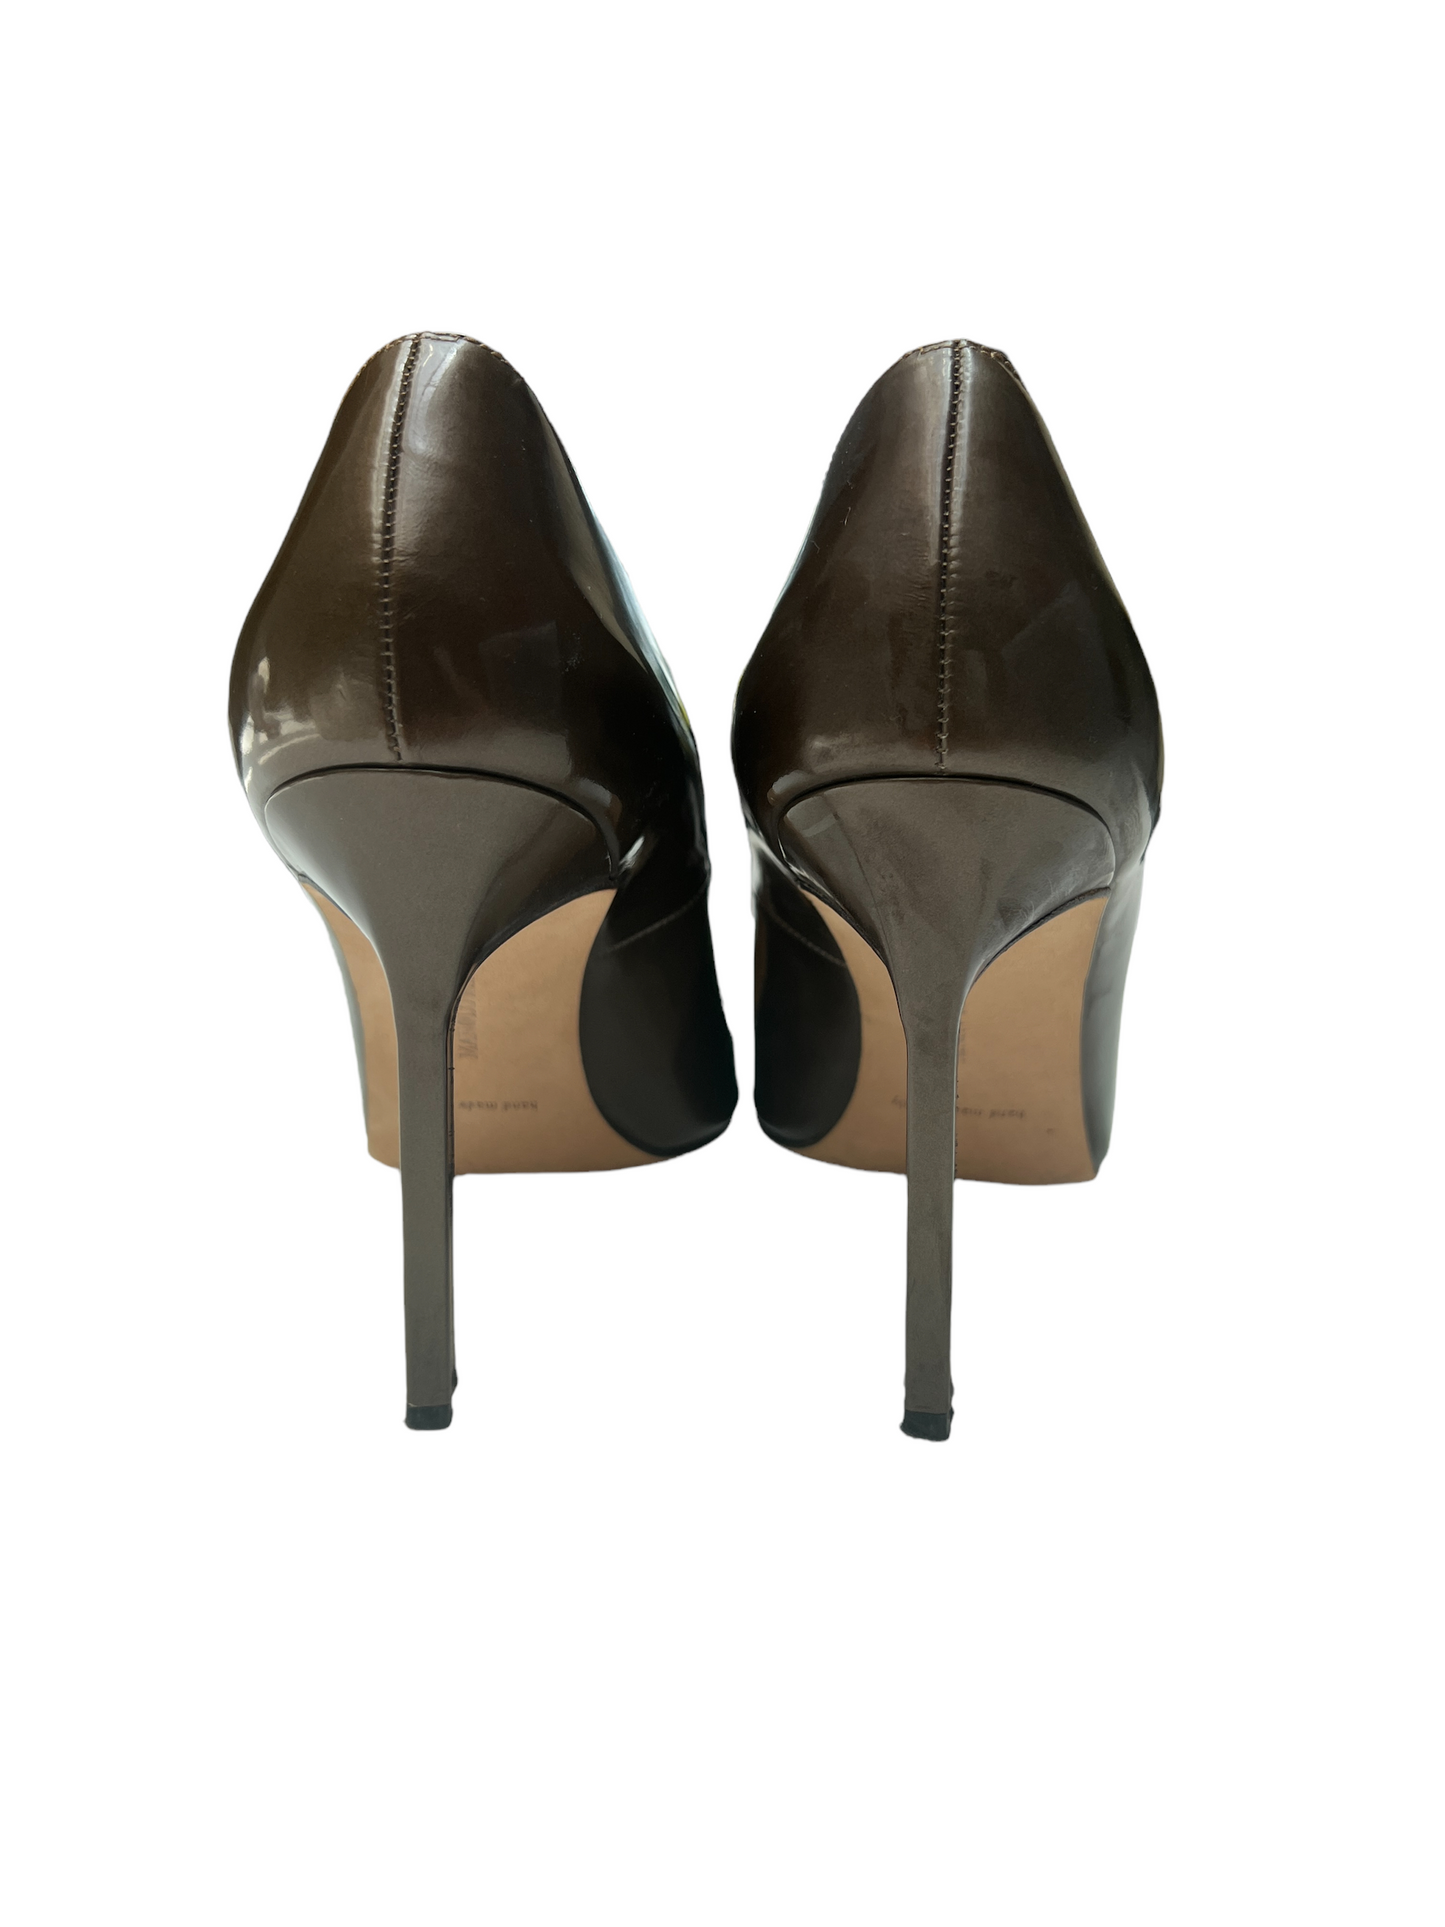 Metallic Brown Patent Brown Heels - 11